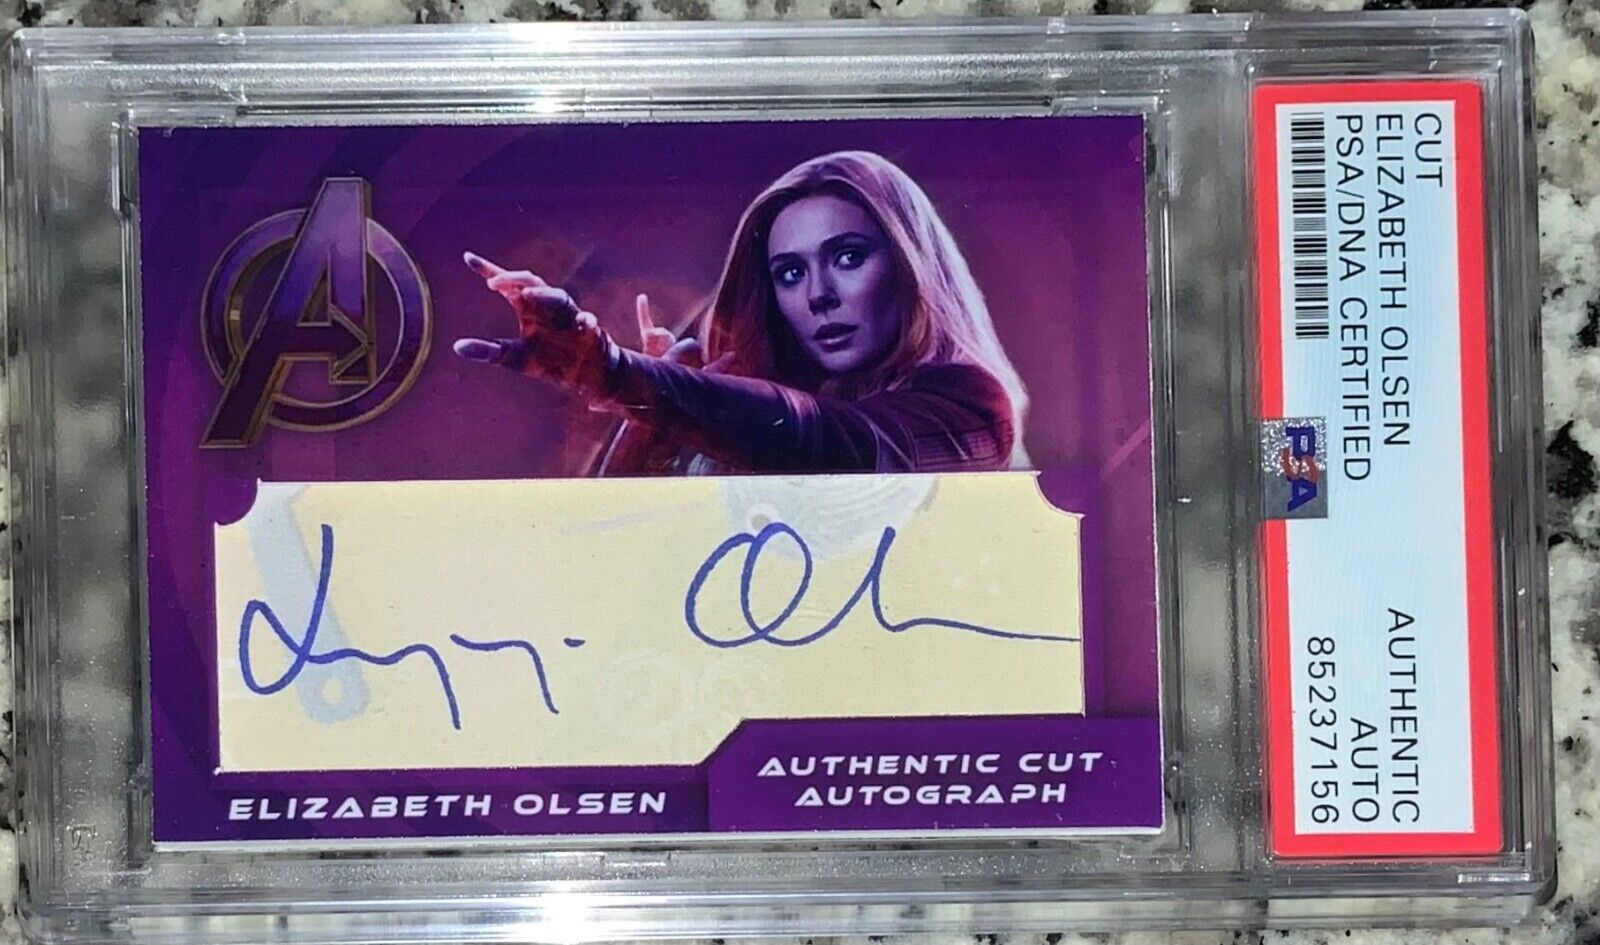 Marvel Avengers Elizabeth Olsen Auto Autograph Cut Custom Card PSA DNA